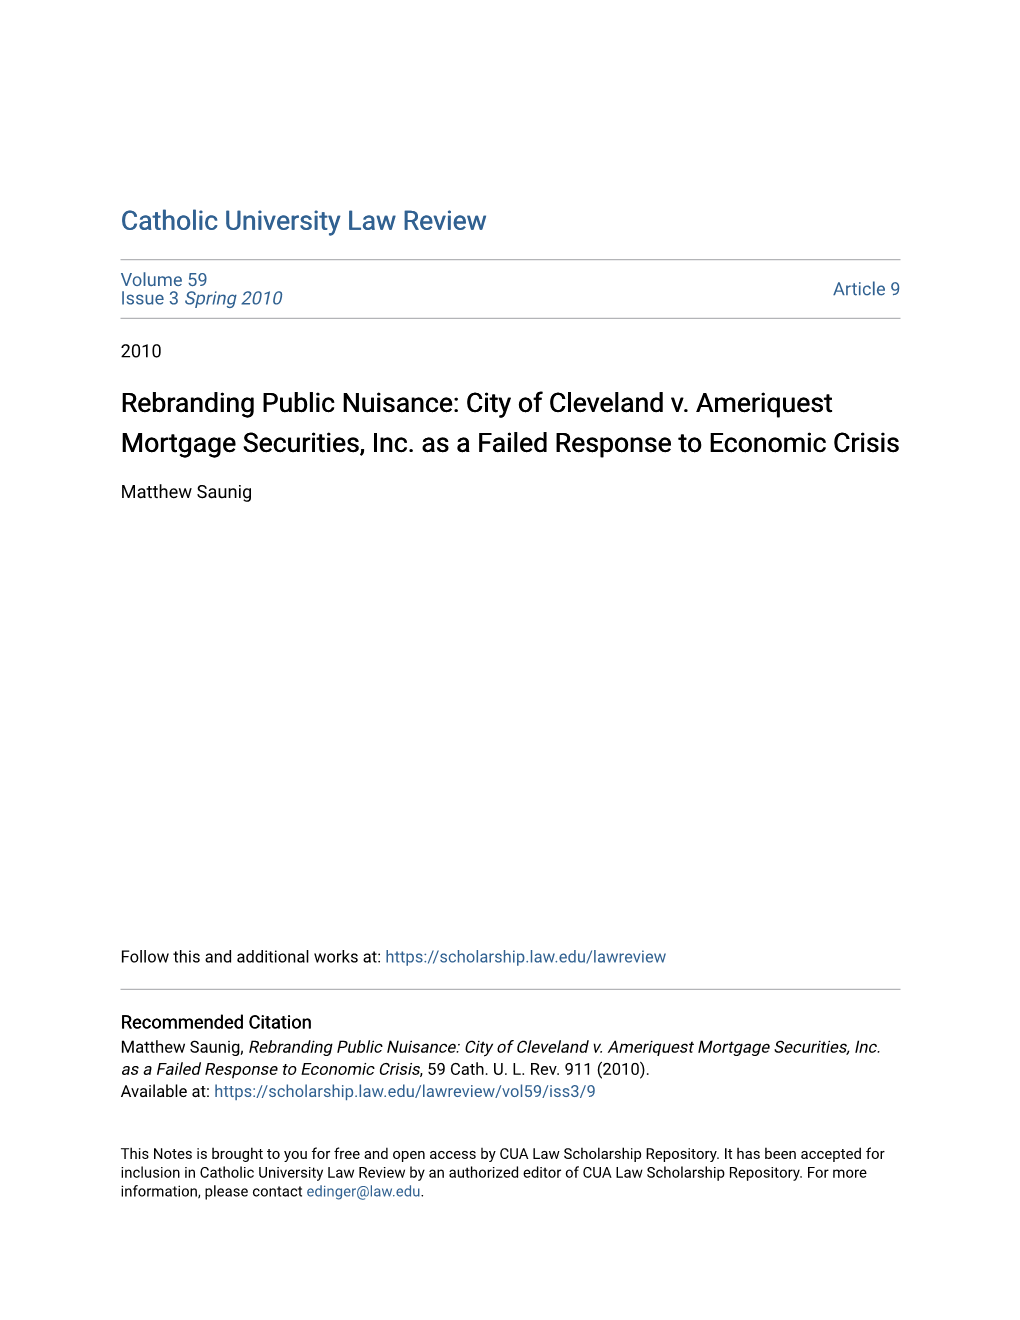 Rebranding Public Nuisance: City of Cleveland V. Ameriquest Mortgage Securities, Inc